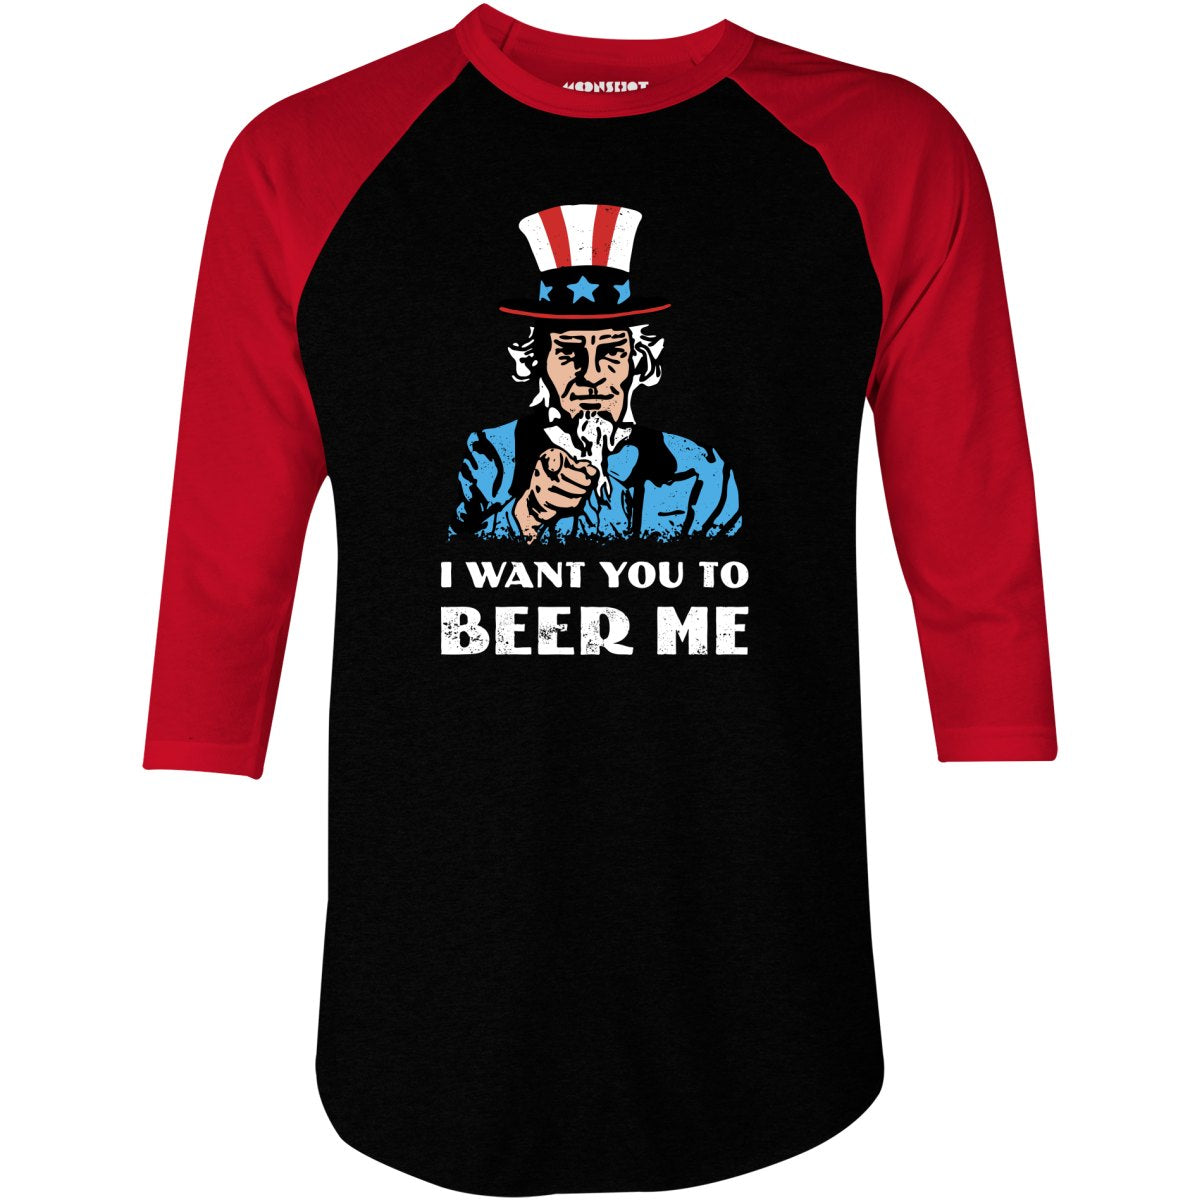 I Want You To Beer Me - 3/4 Sleeve Raglan T-Shirt